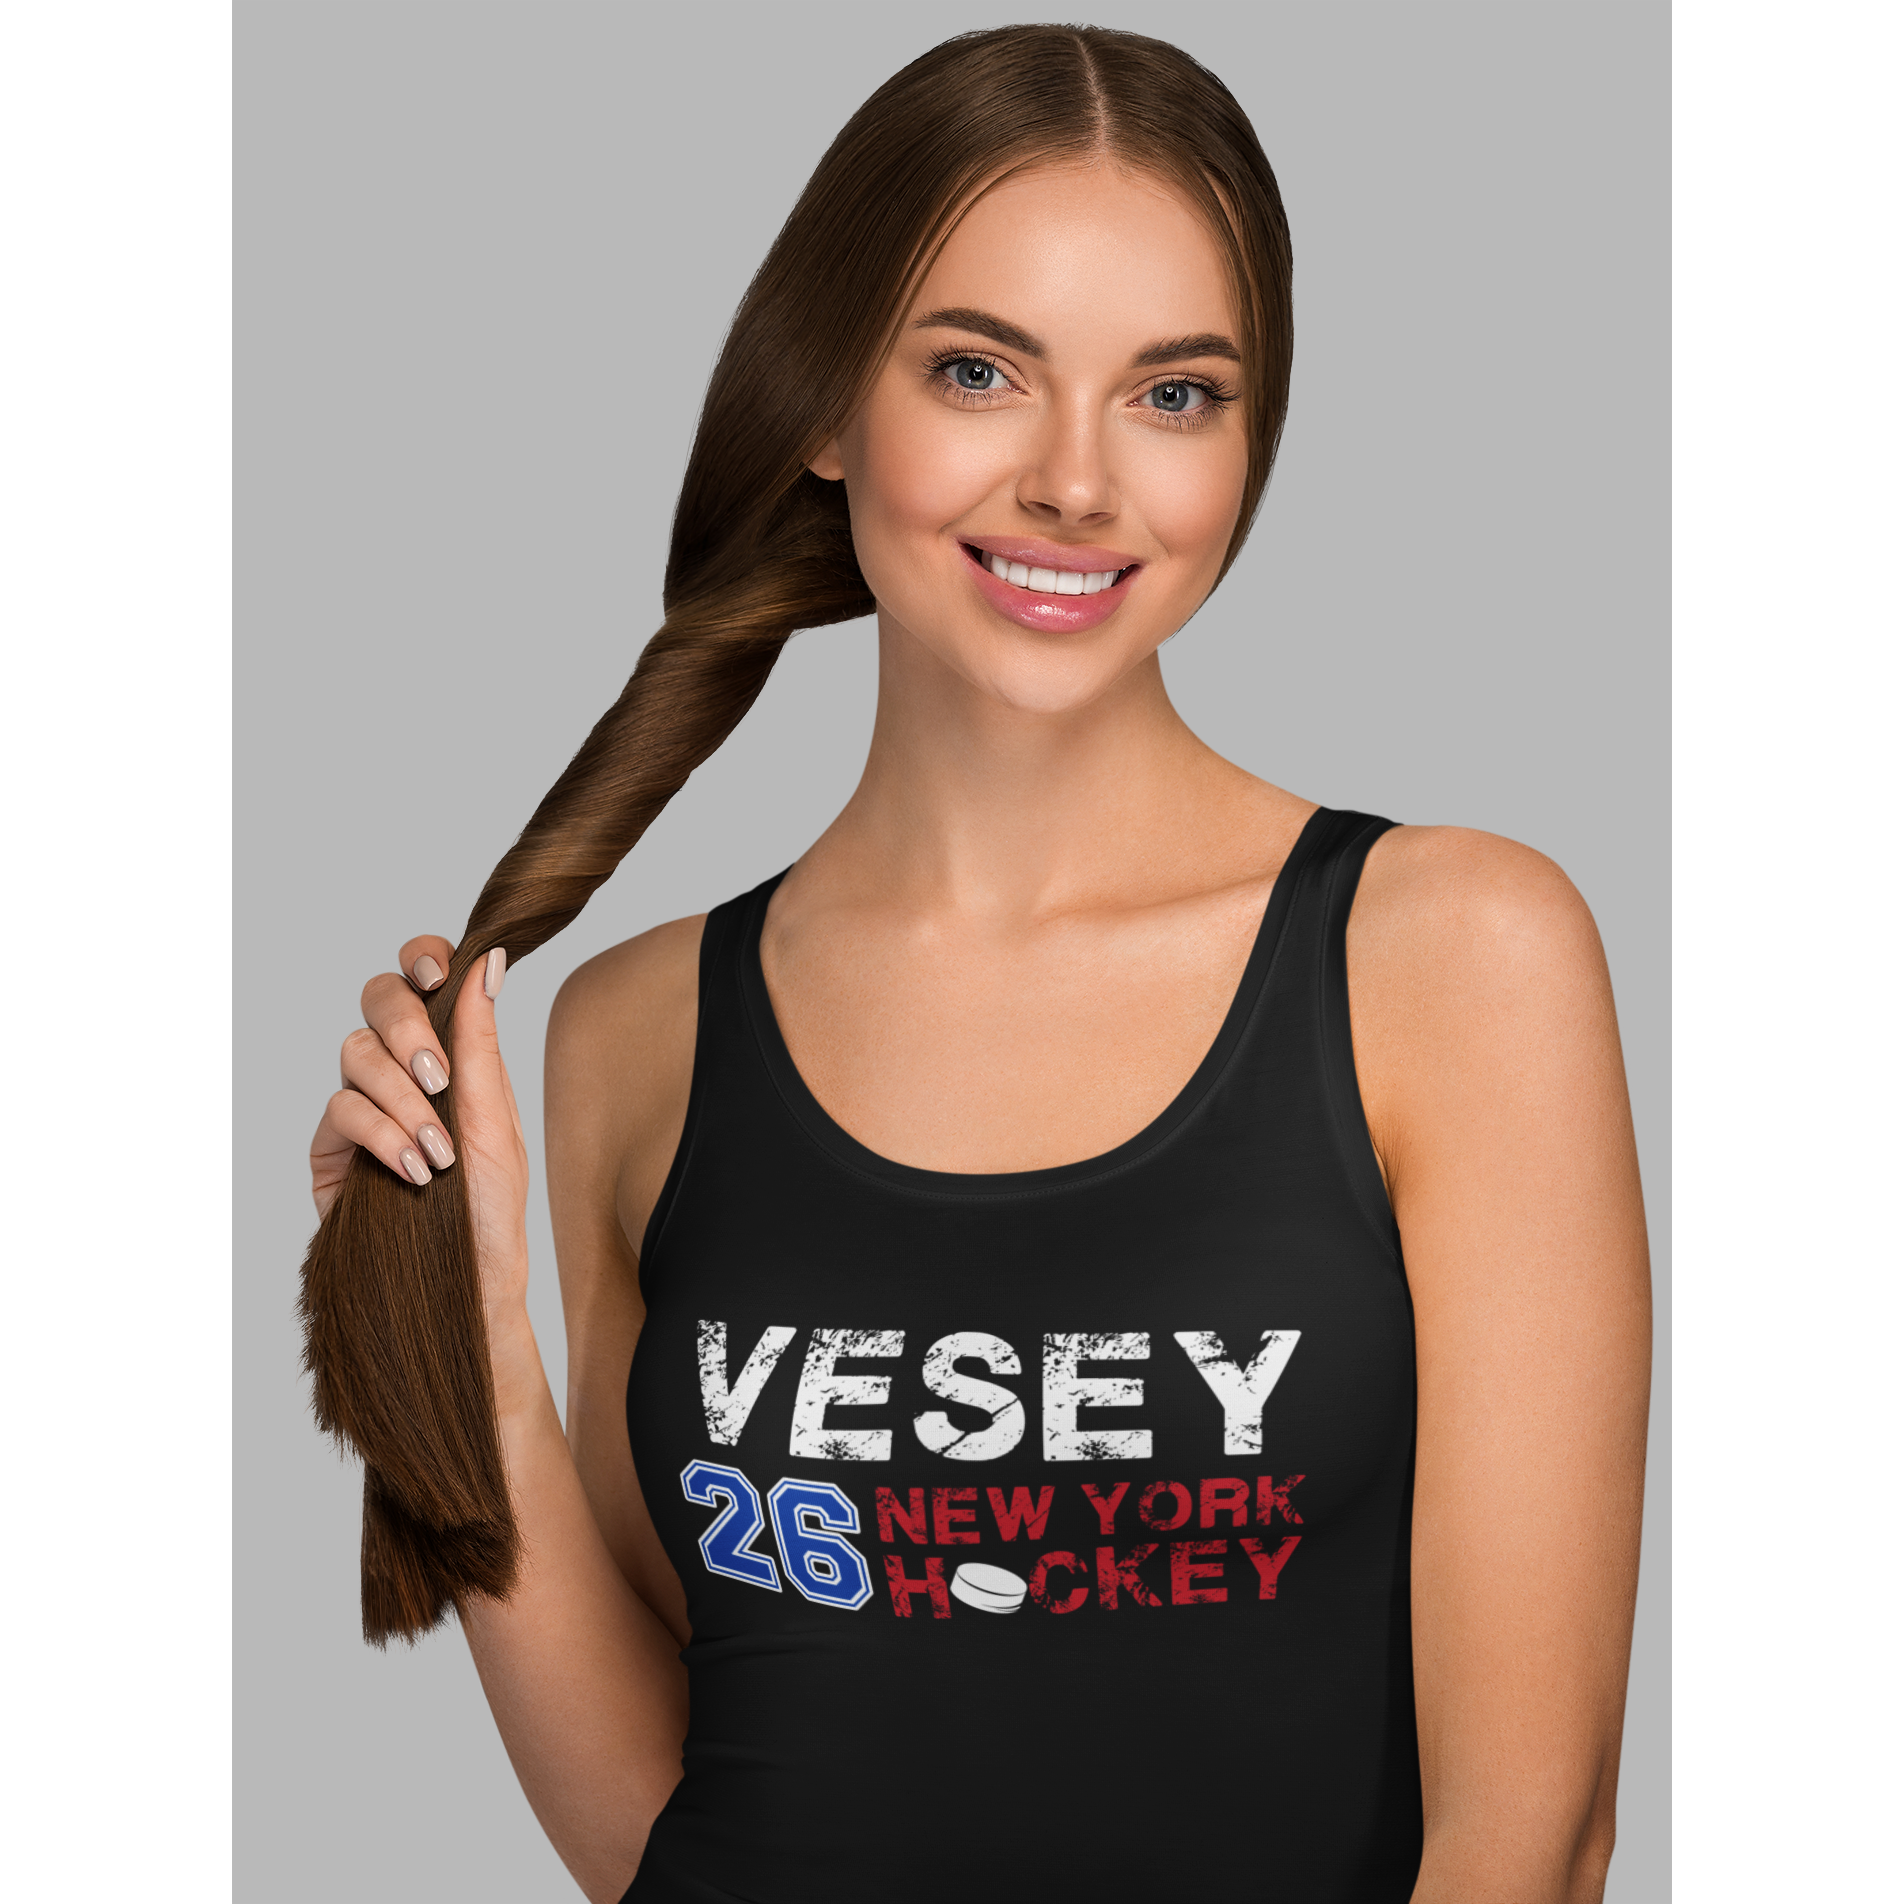 Vesey 26 New York Hockey Women's Tri-Blend Racerback Tank Top